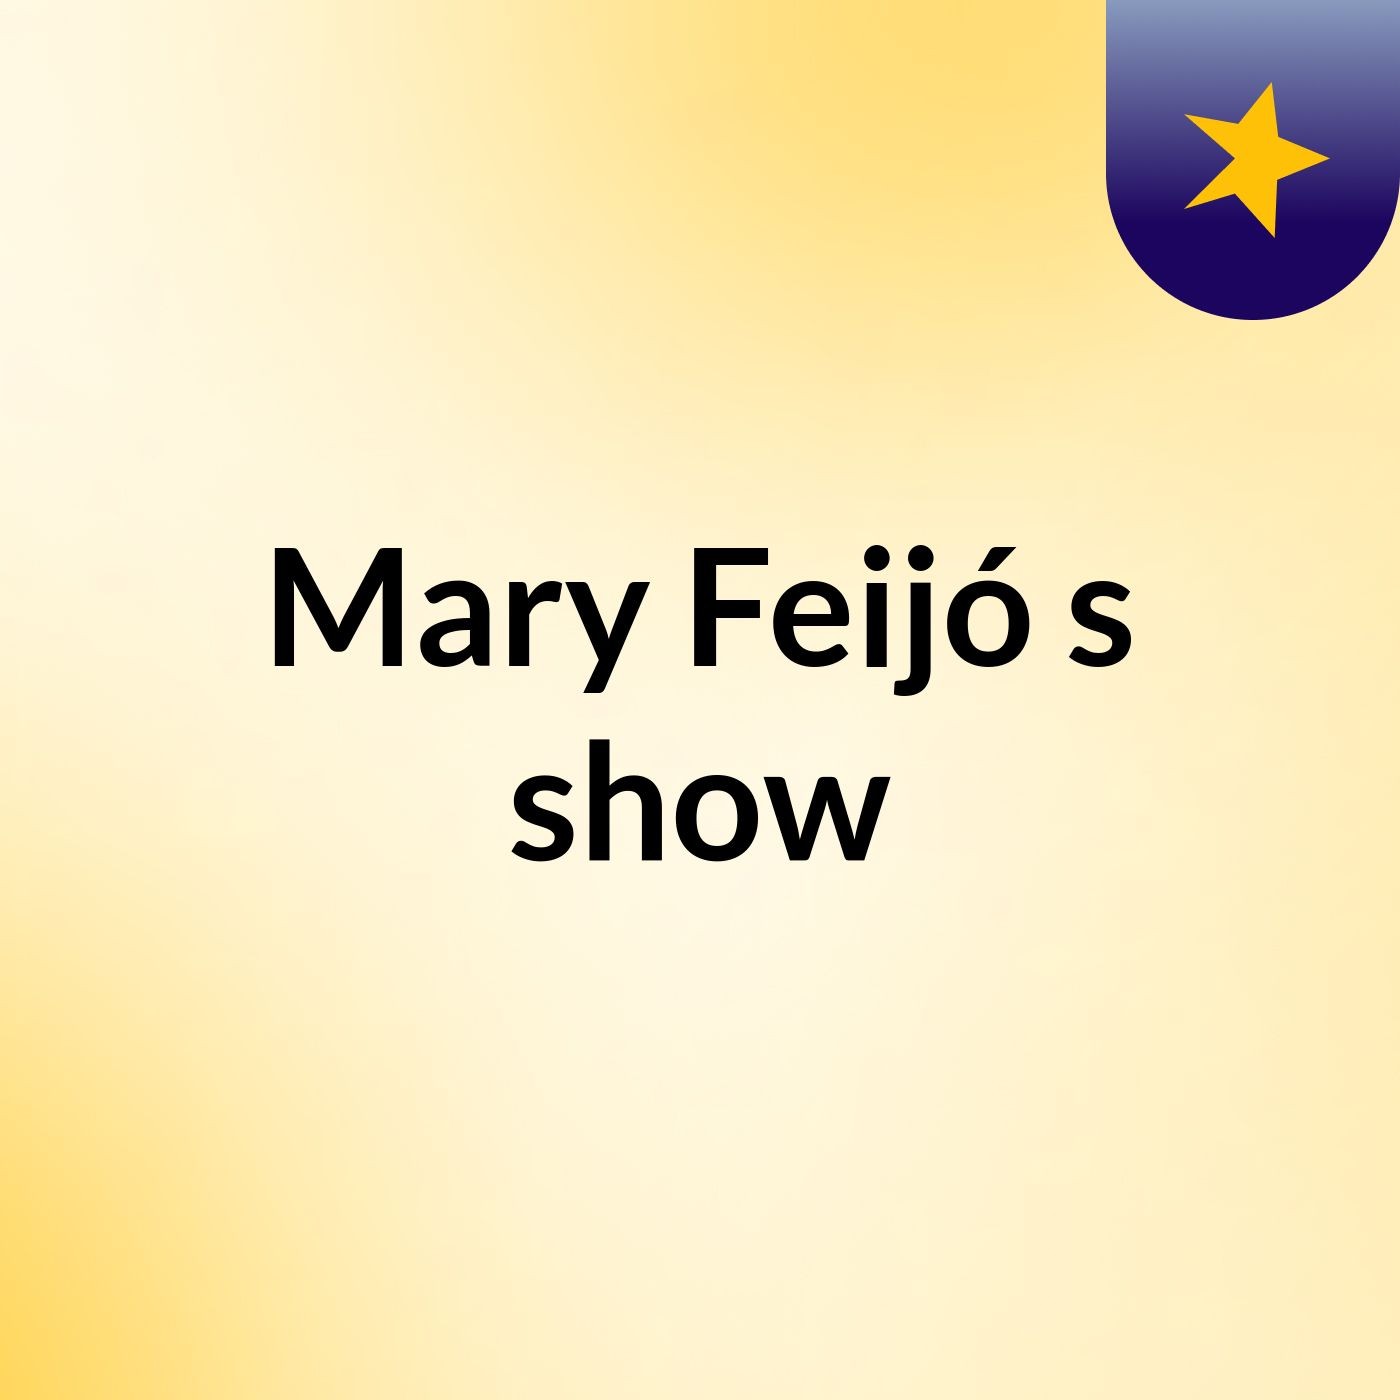 Mary Feijó's show